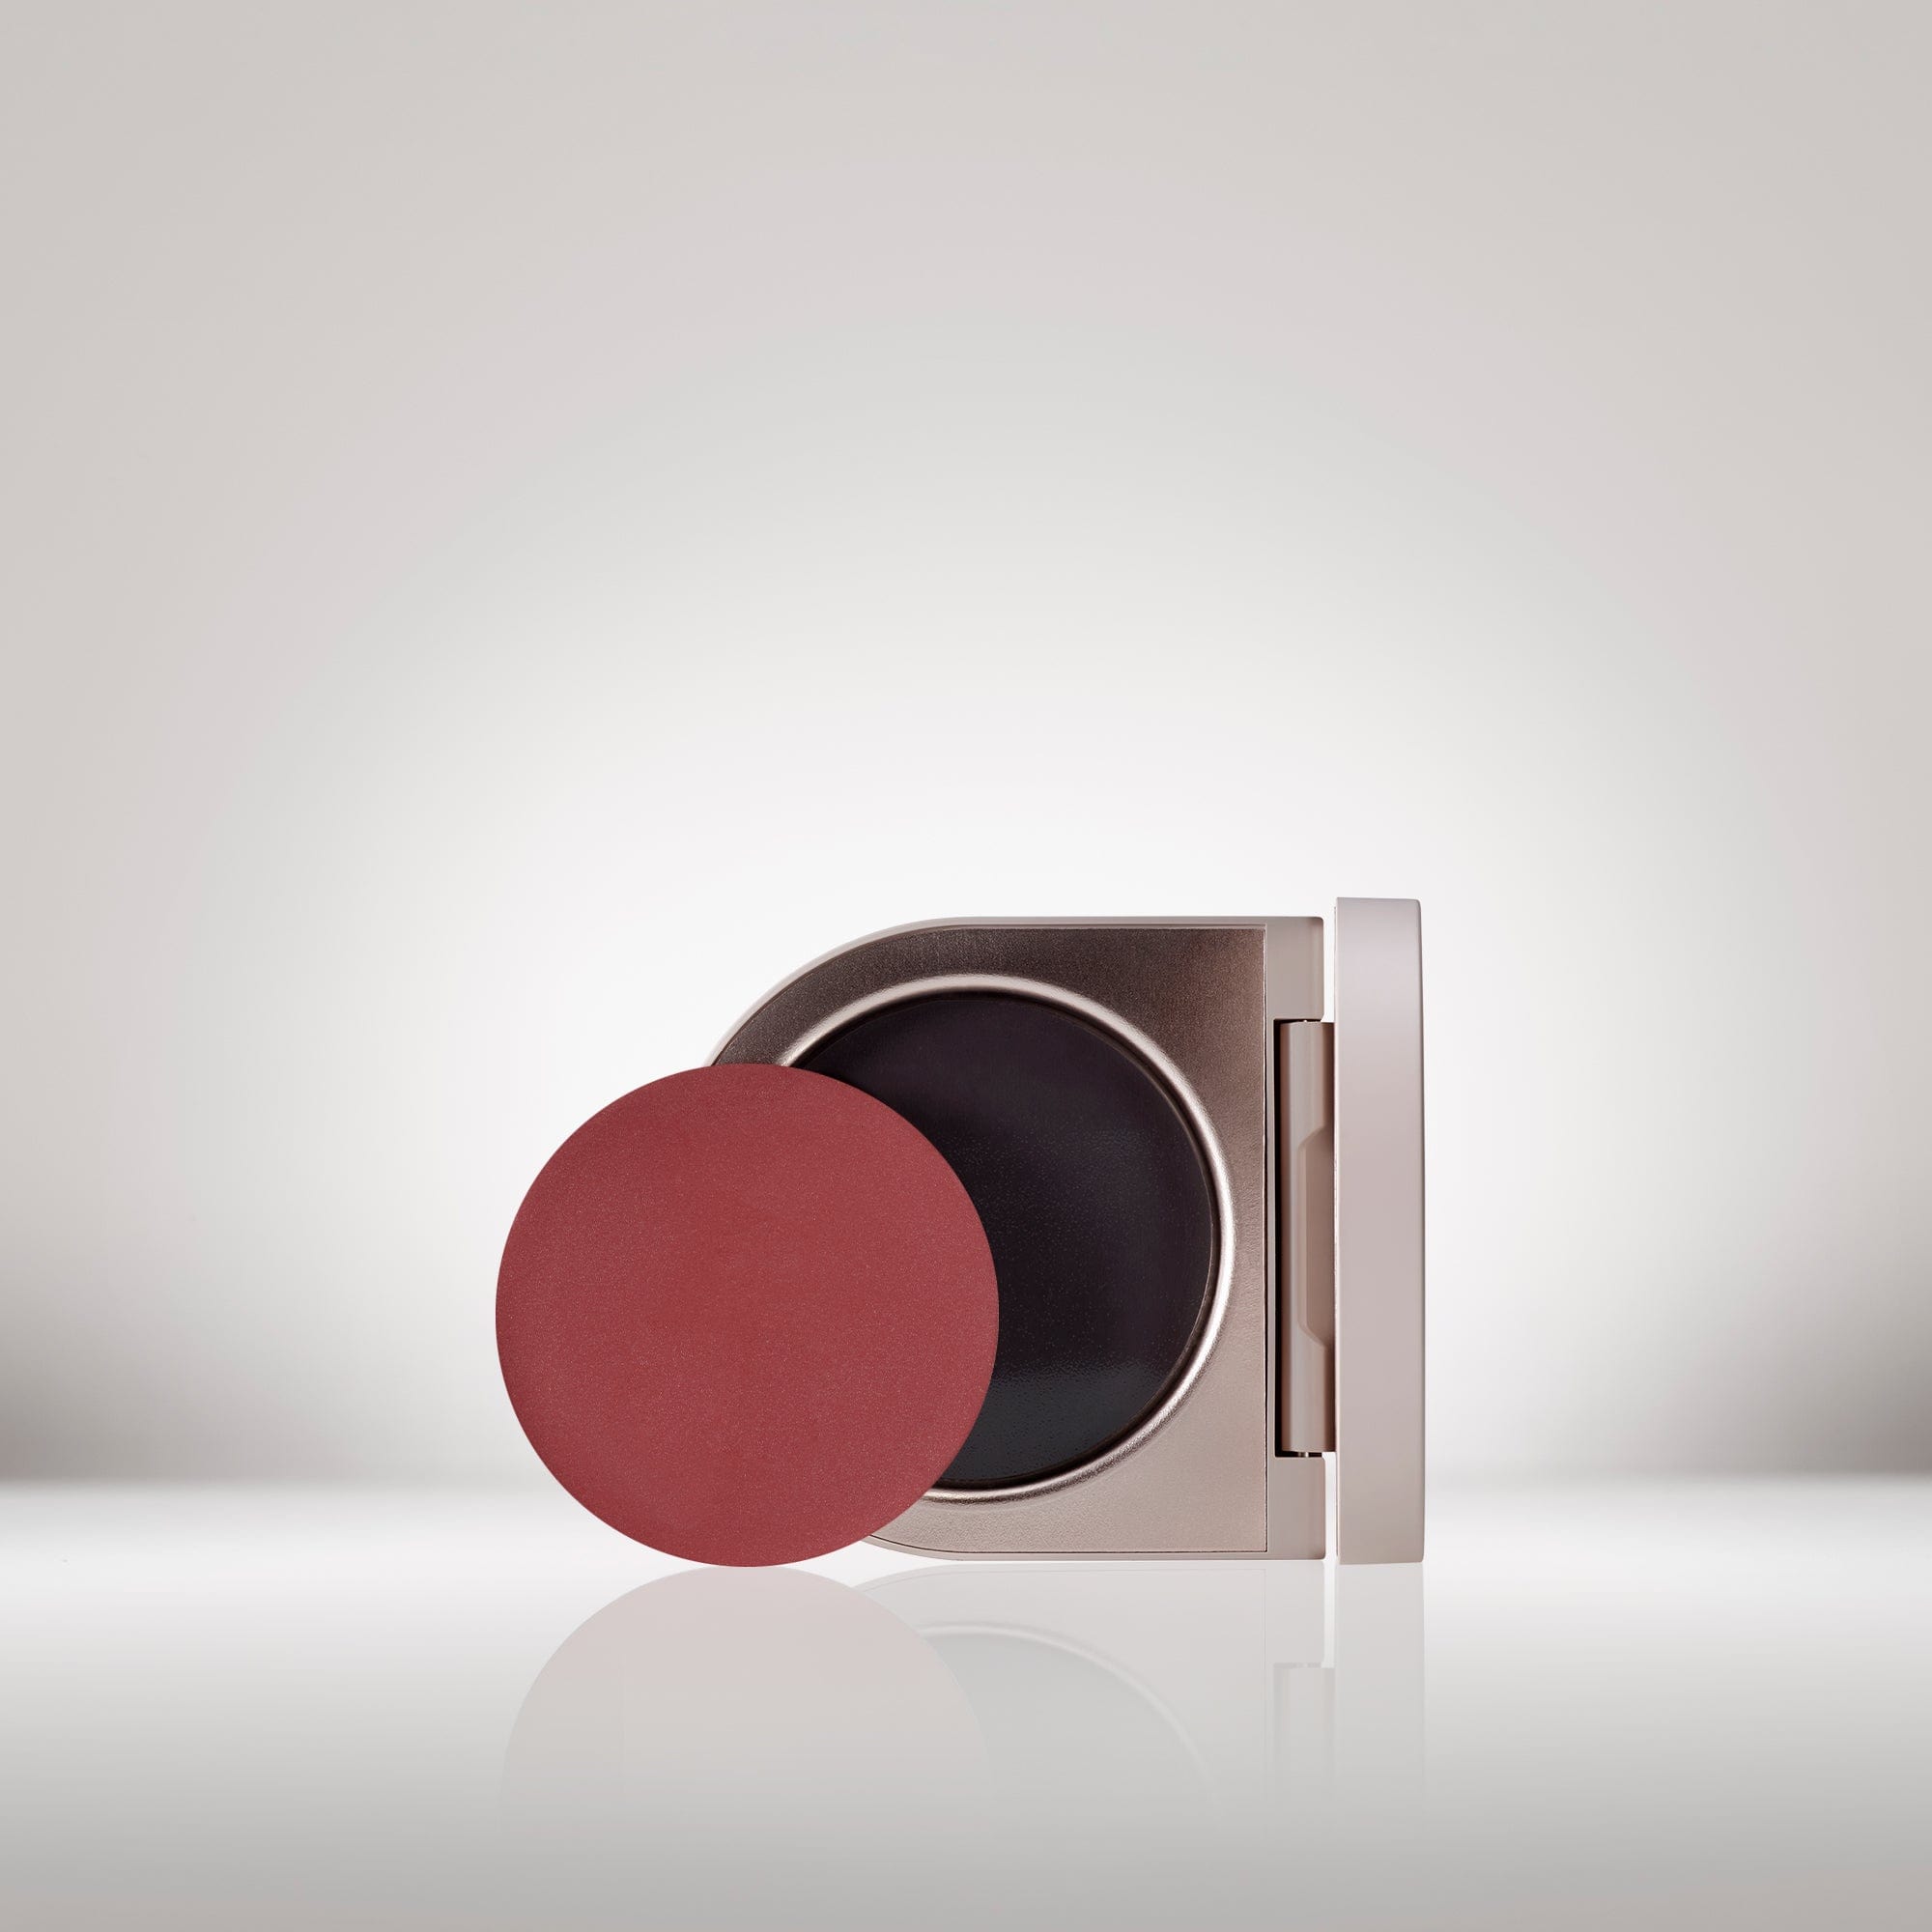 Image of the Cream Blush Refillable Cheek & Lip Color in Azalea in front of the open compact - Cream blush